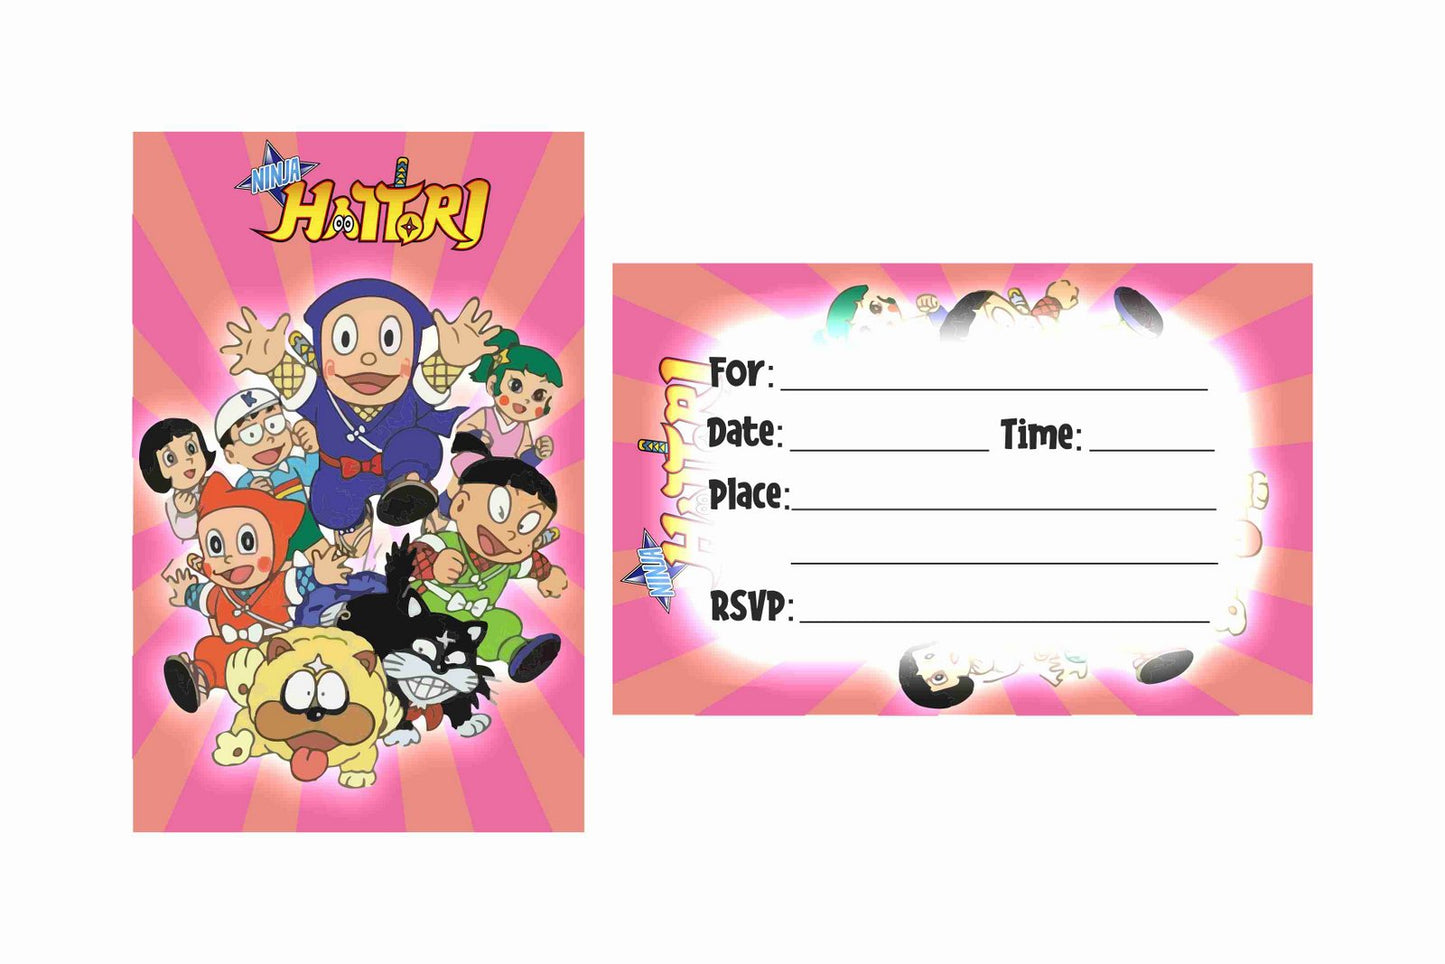 Ninja Hattori Theme Children's Birthday Party Invitations Cards with Envelopes - Kids Birthday Party Invitations for Boys or Girls,- Invitation Cards (Pack of 10)